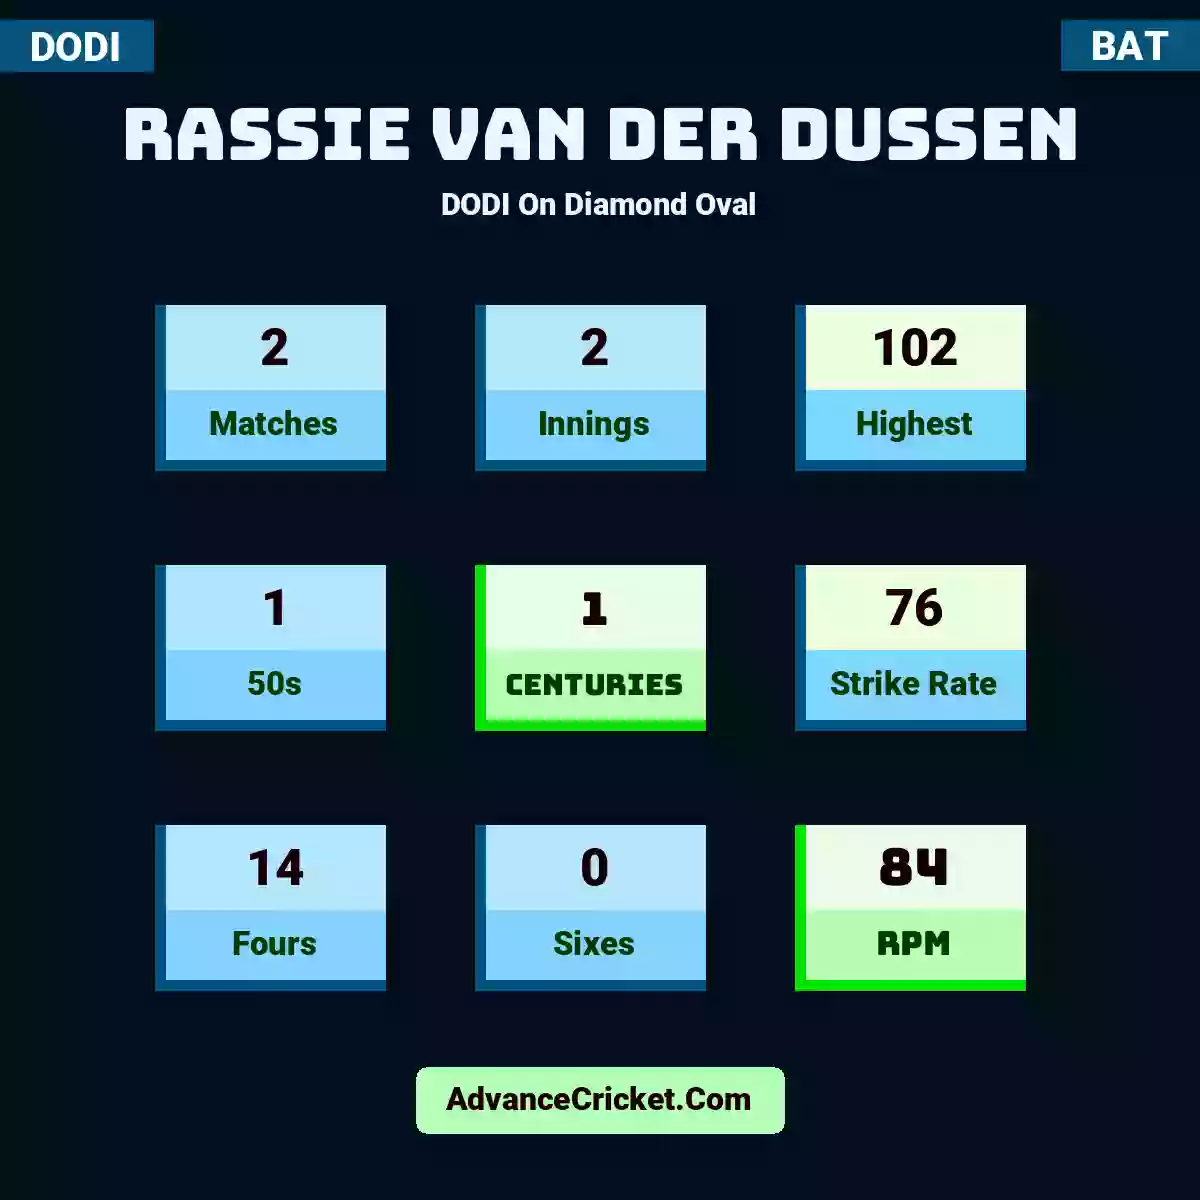 Rassie van der Dussen DODI  On Diamond Oval, Rassie van der Dussen played 2 matches, scored 102 runs as highest, 1 half-centuries, and 1 centuries, with a strike rate of 76. R.Dussen hit 14 fours and 0 sixes, with an RPM of 84.